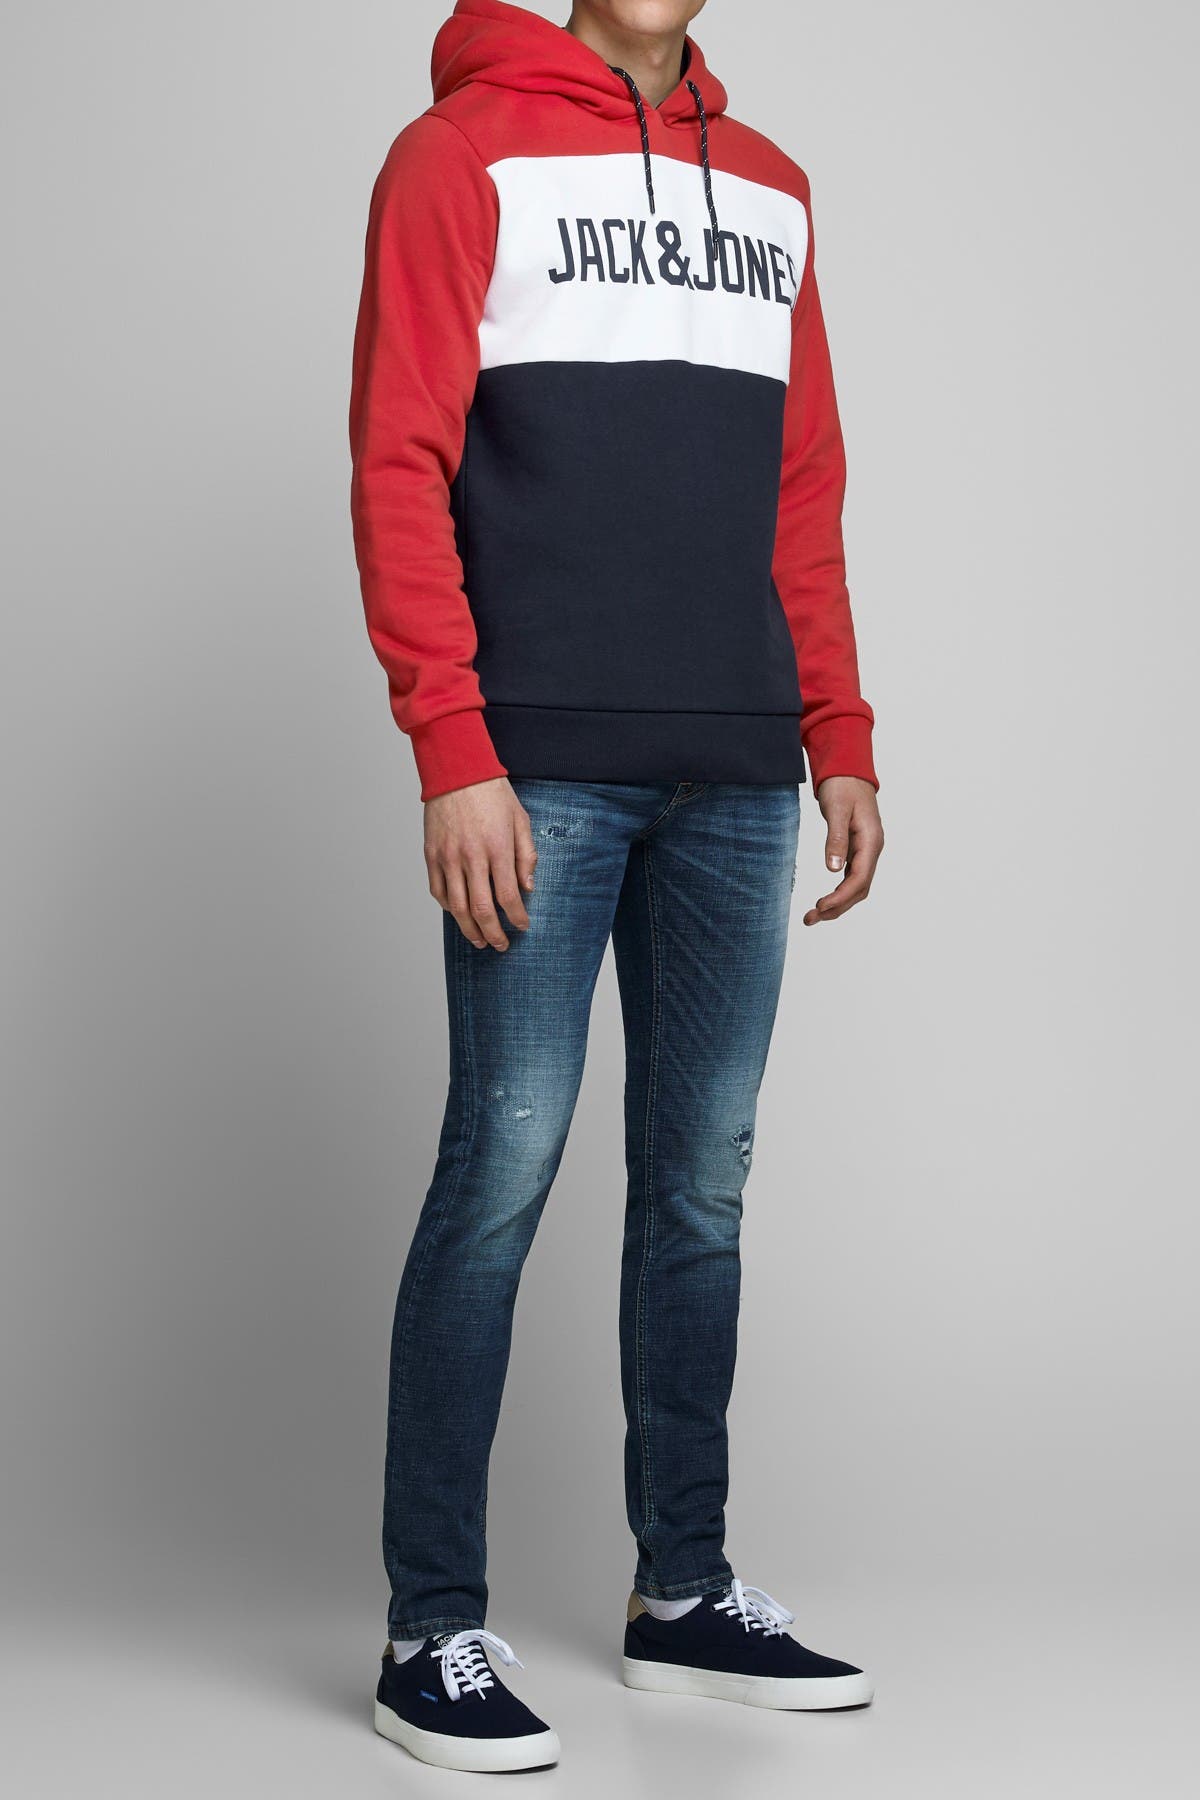 Jack & Jones Logo Colorblock Hooded Sweatshirt In Dark Red4